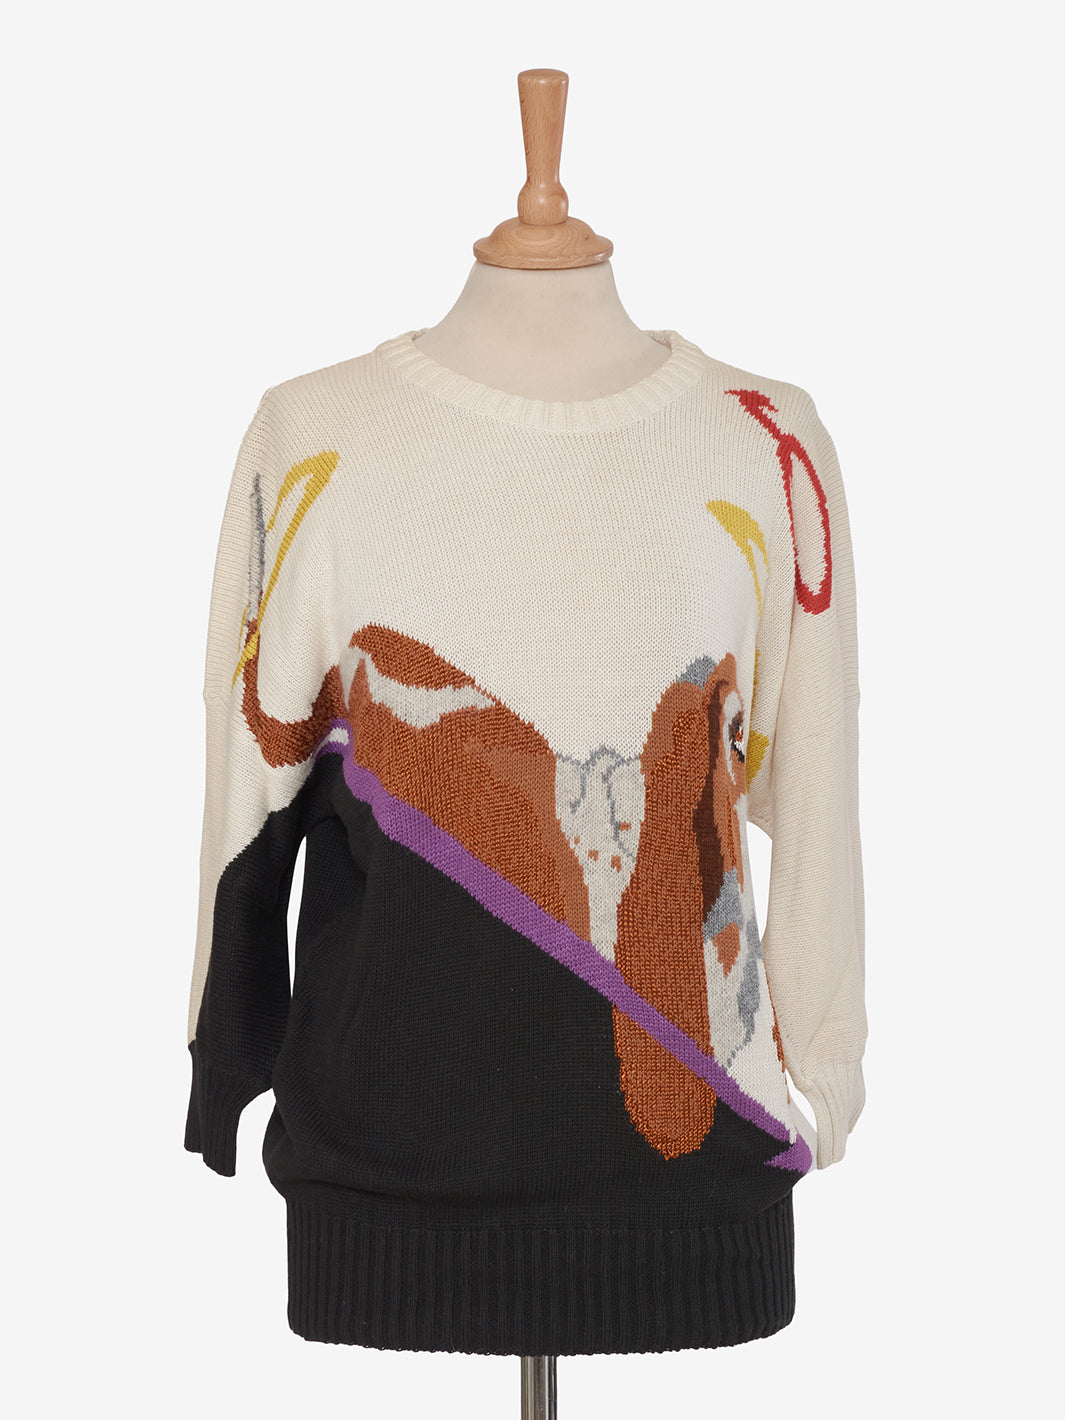 Krizia Dog Embroidery Sweater